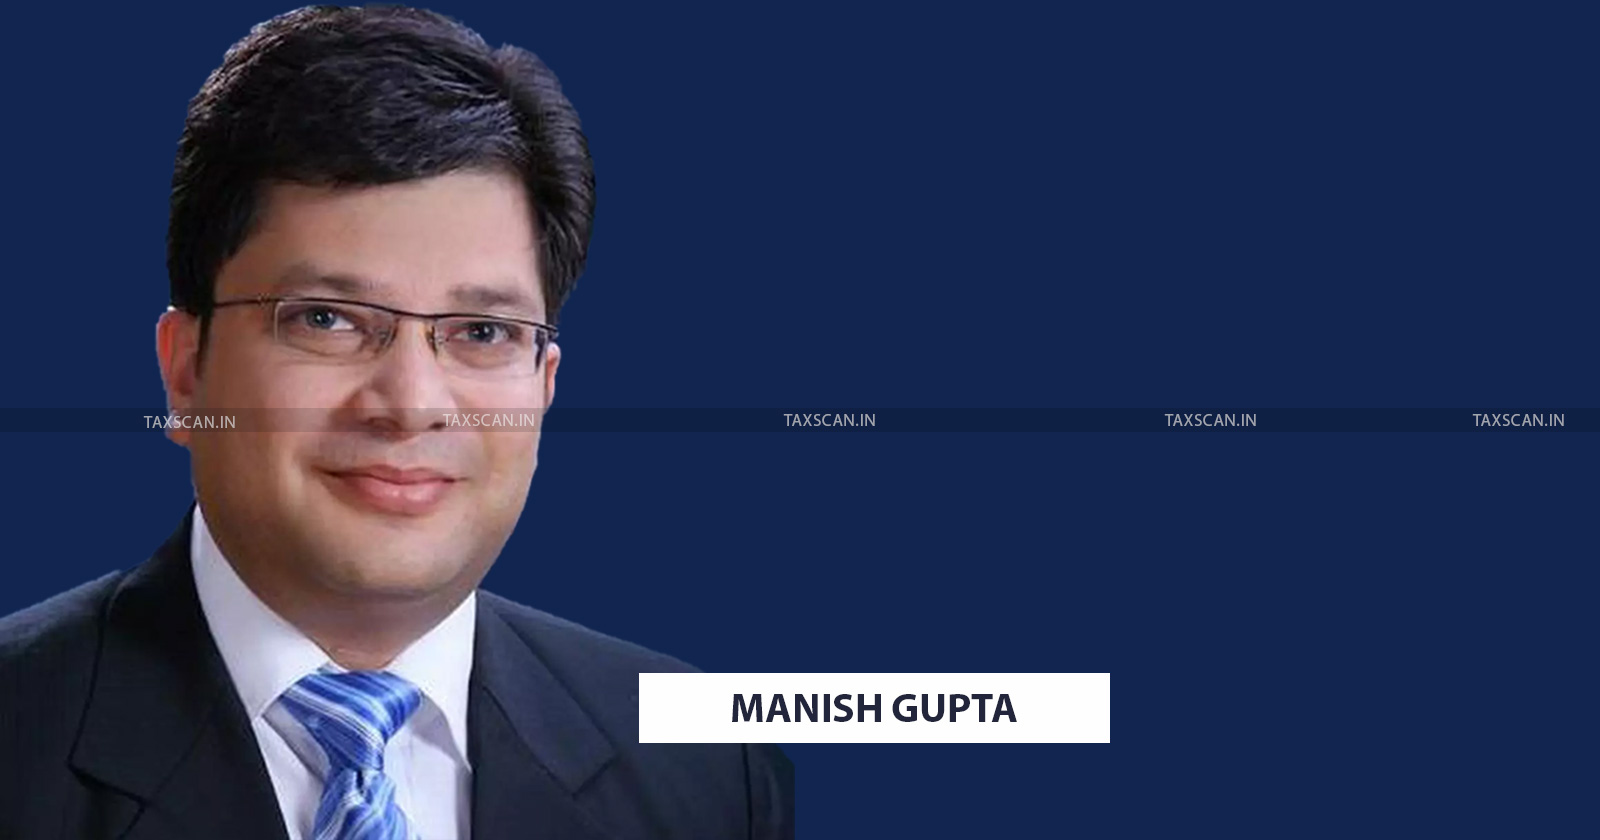 ICSI - International Sustainability Standards - Manish Gupta - President of ICSI - taxscan